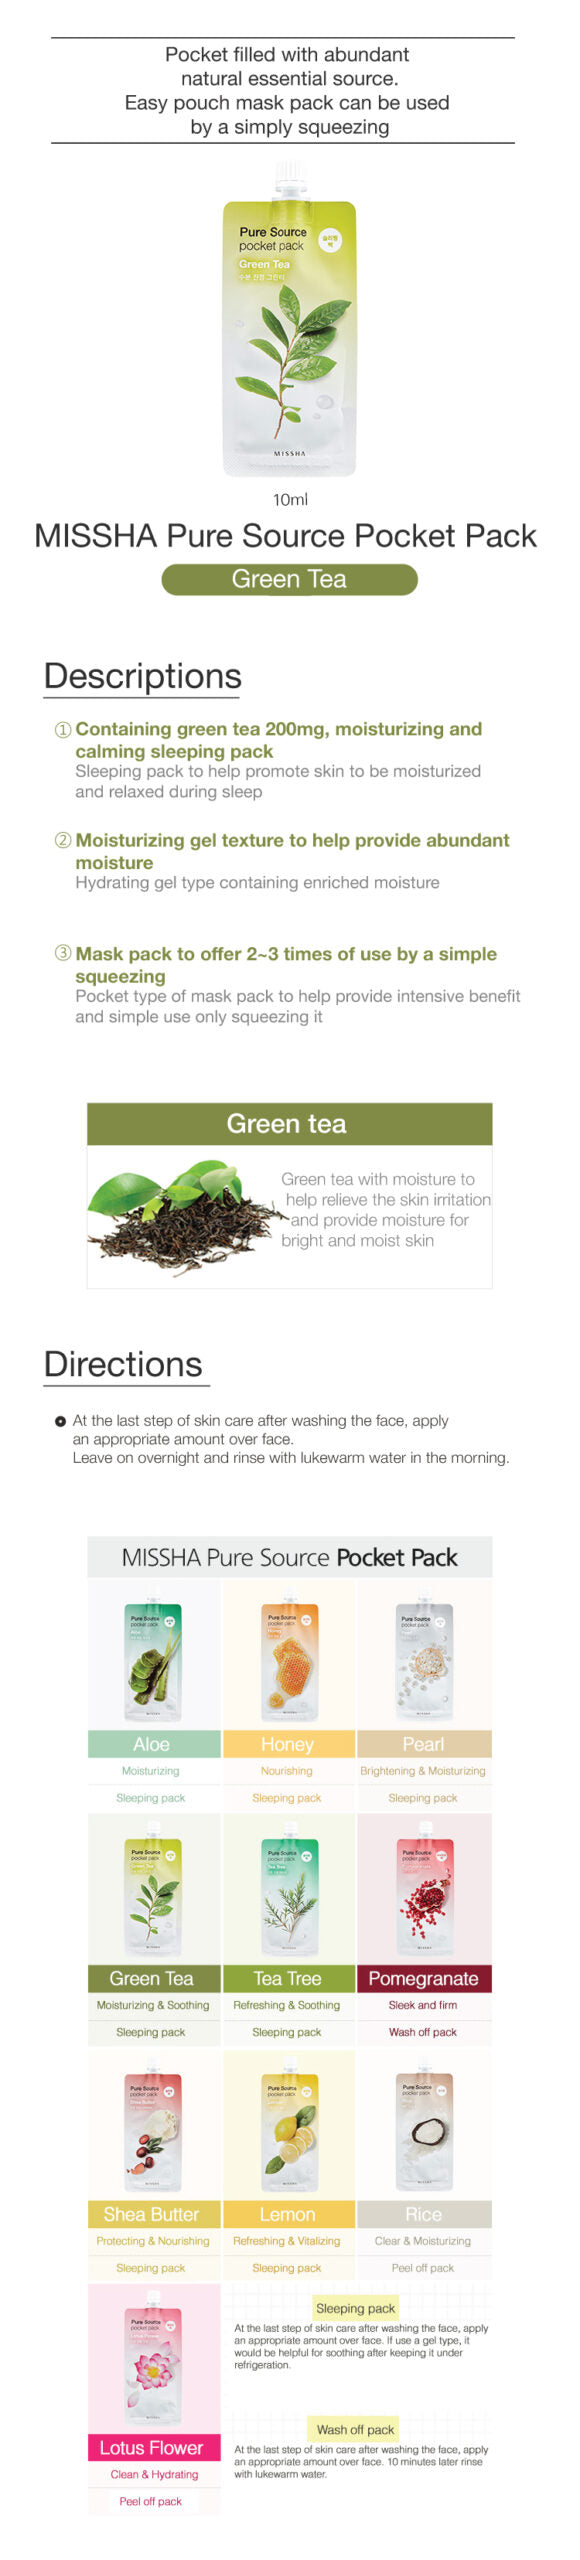 MISSHA Pure Source Pocket Pack Green Tea 10ml MISSHA